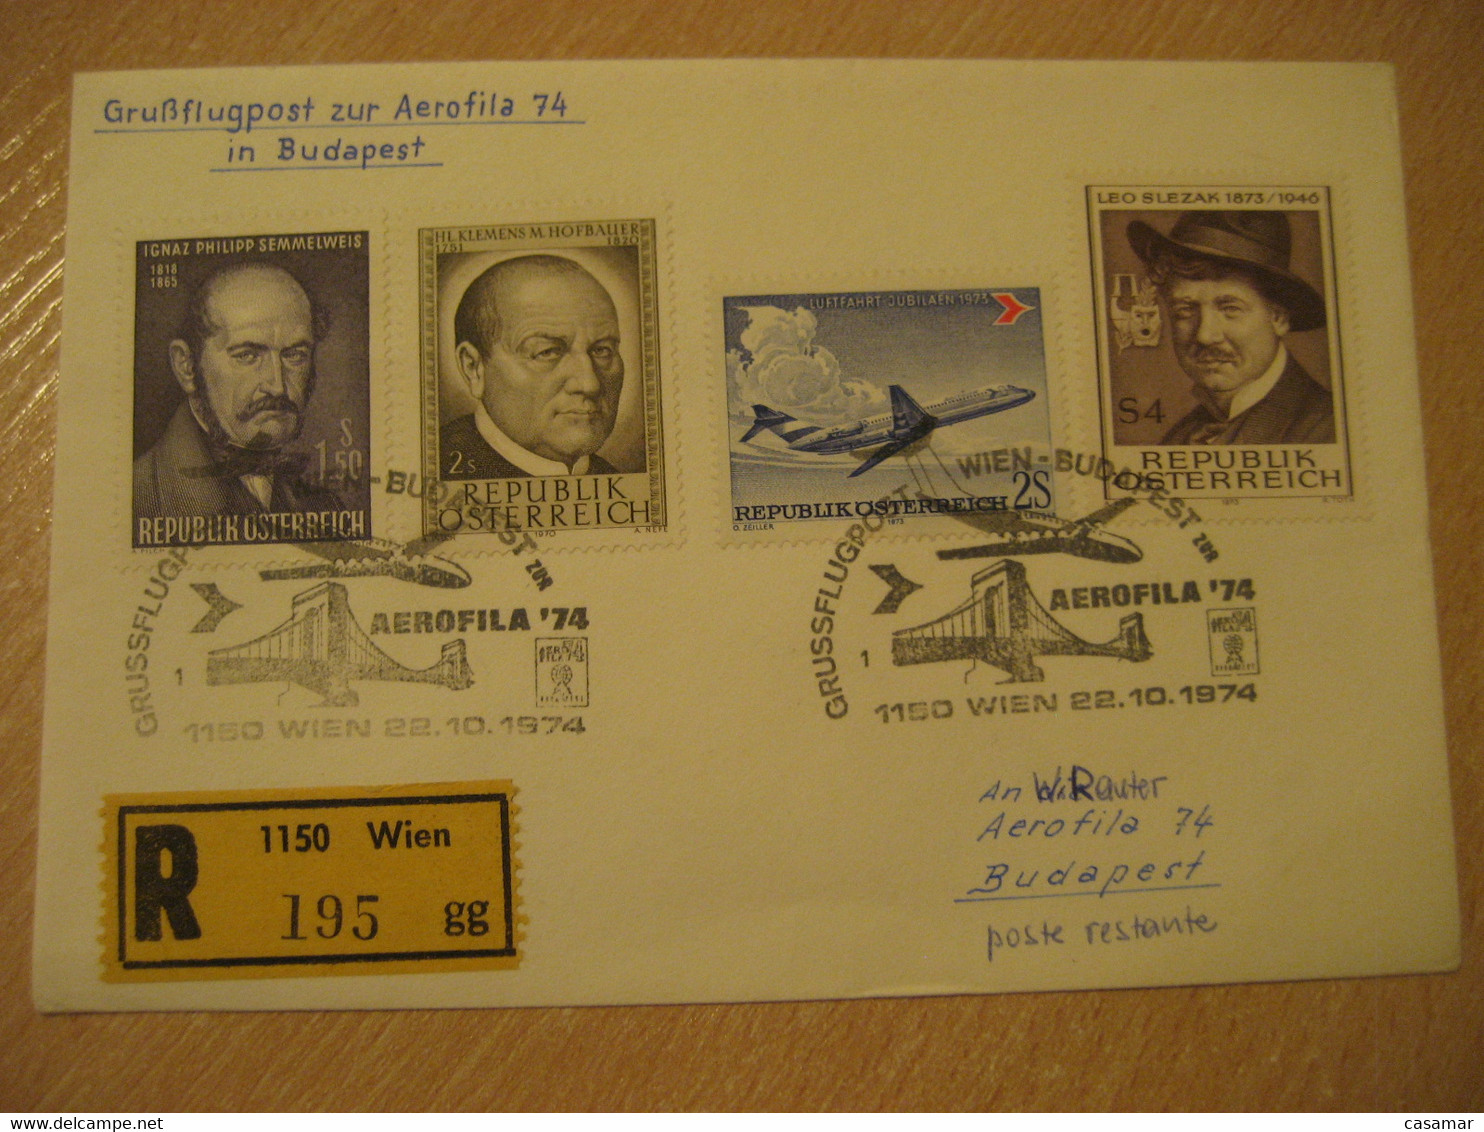 BUDAPEST Wien 1974 First Flight Cancel Registered Cover HUNGARY AUSTRIA - Storia Postale